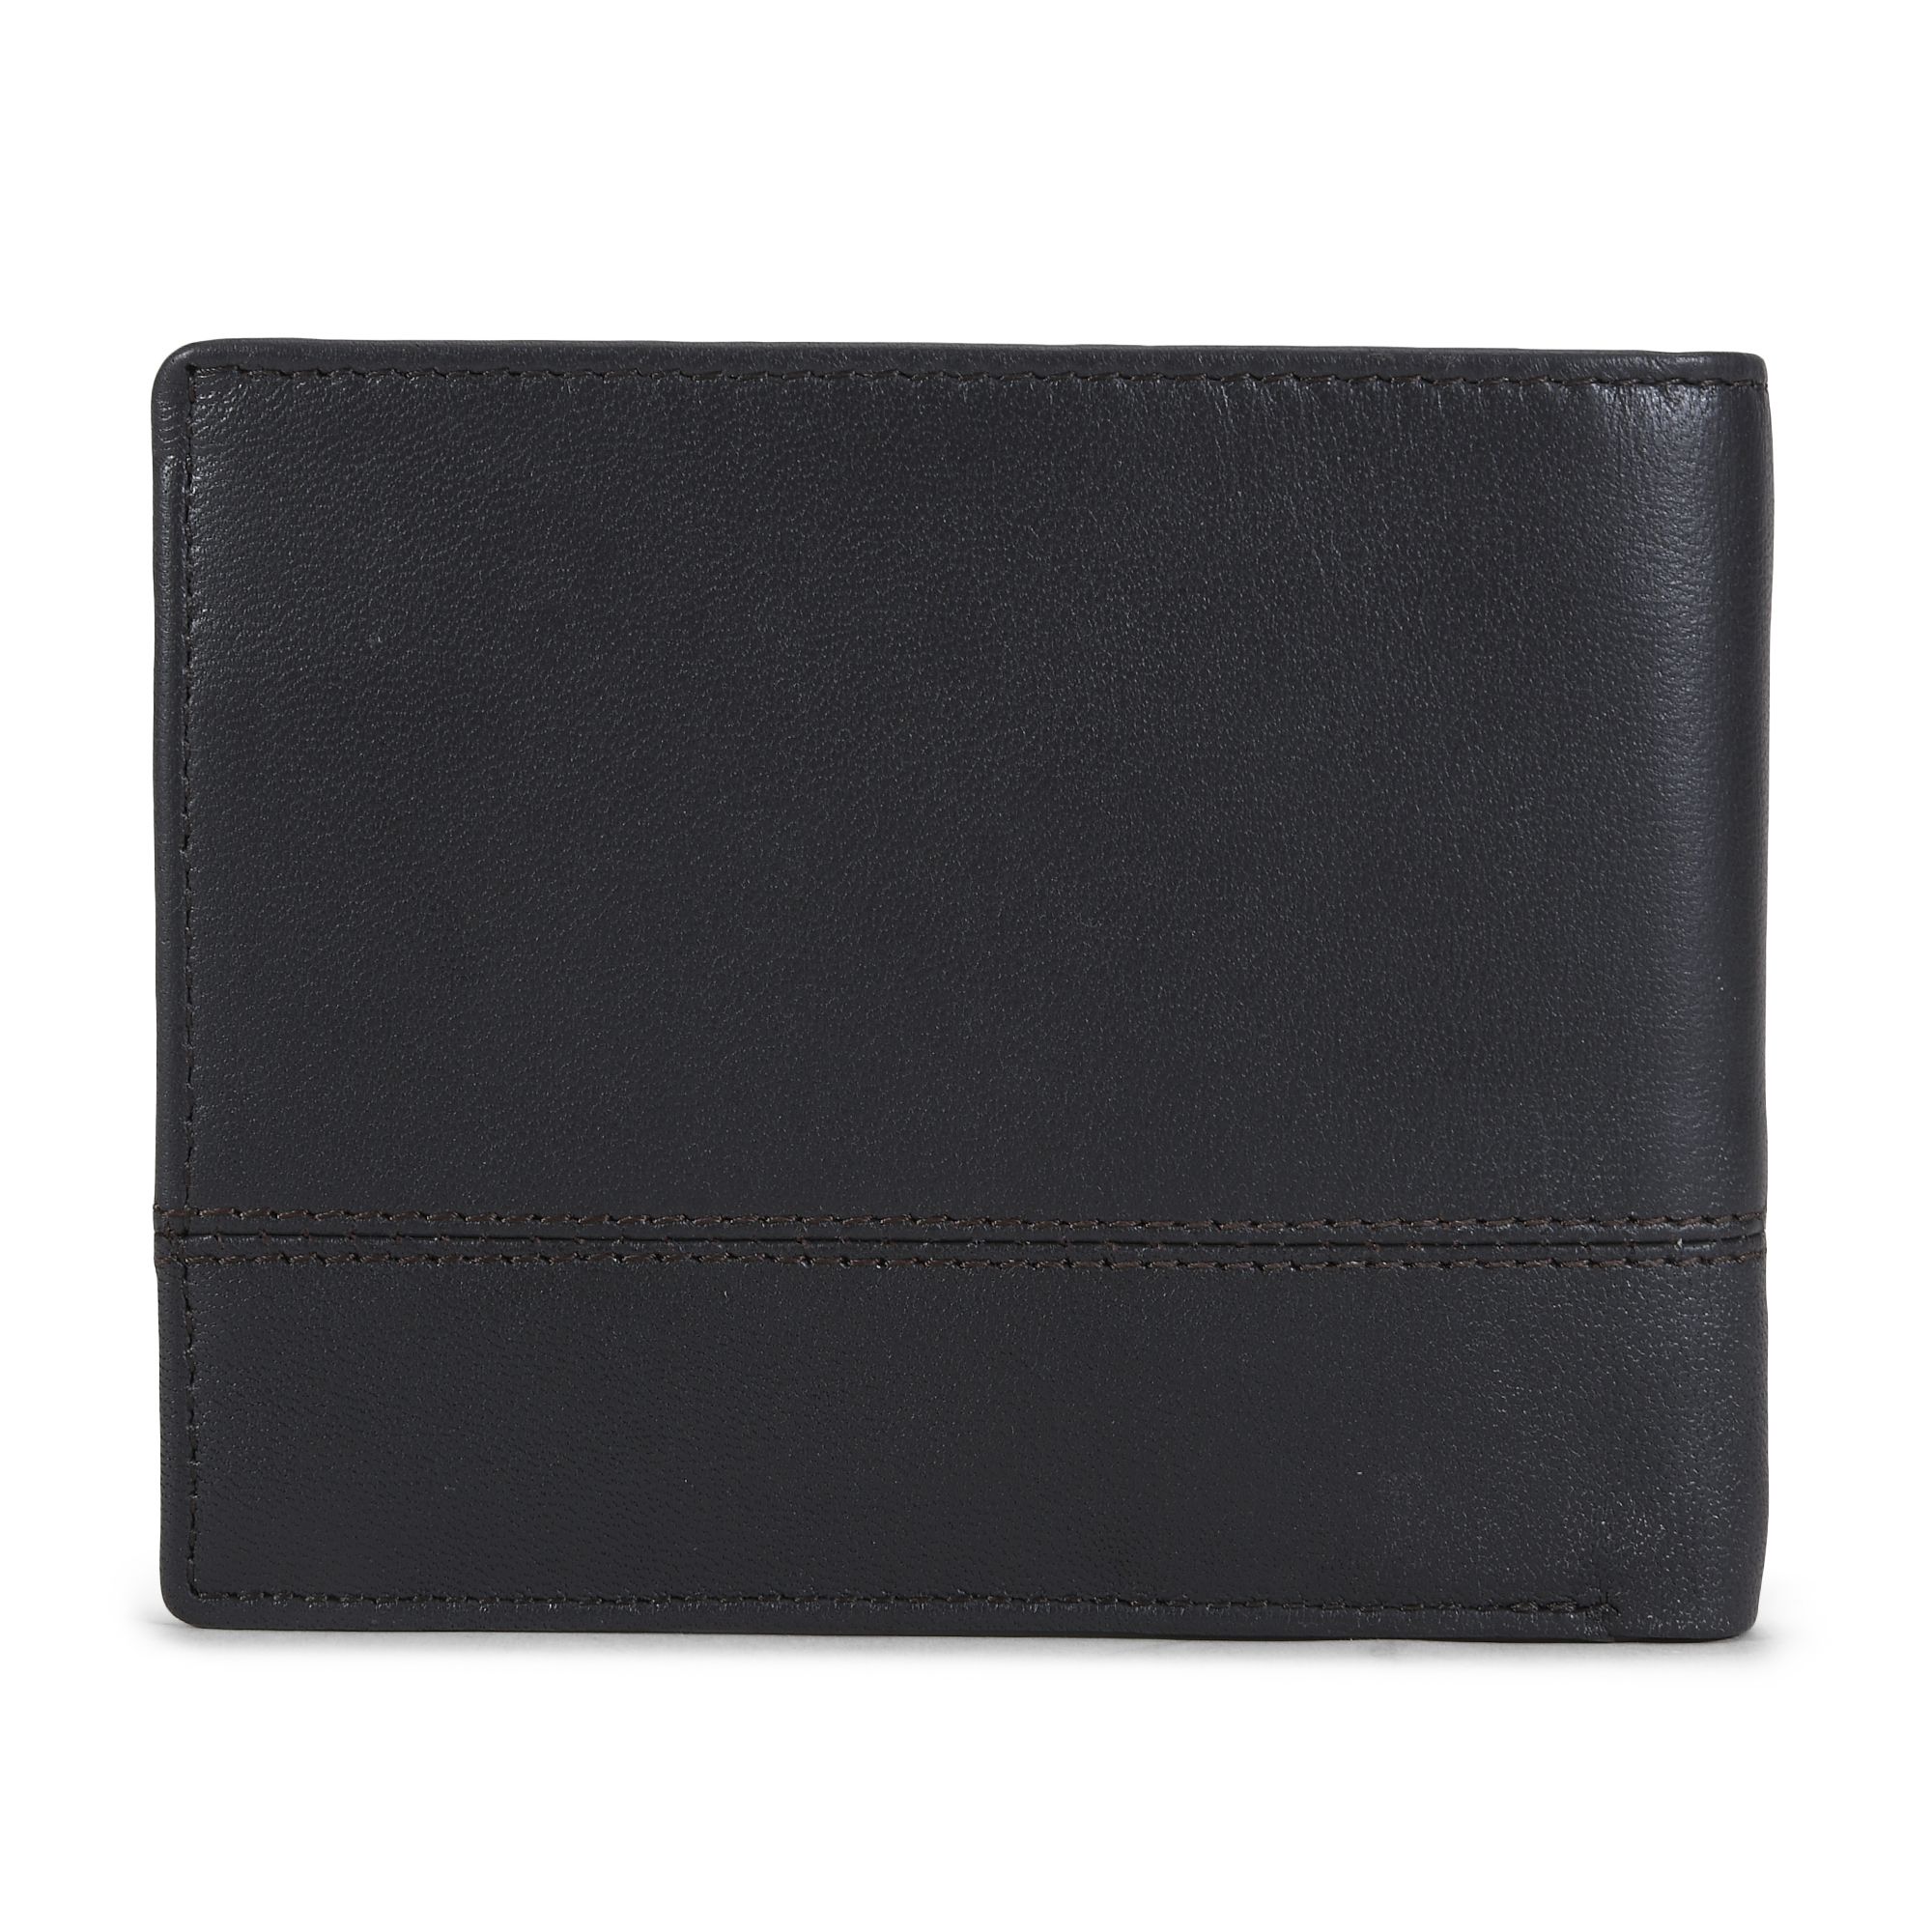 Dark brown leather wallet for men